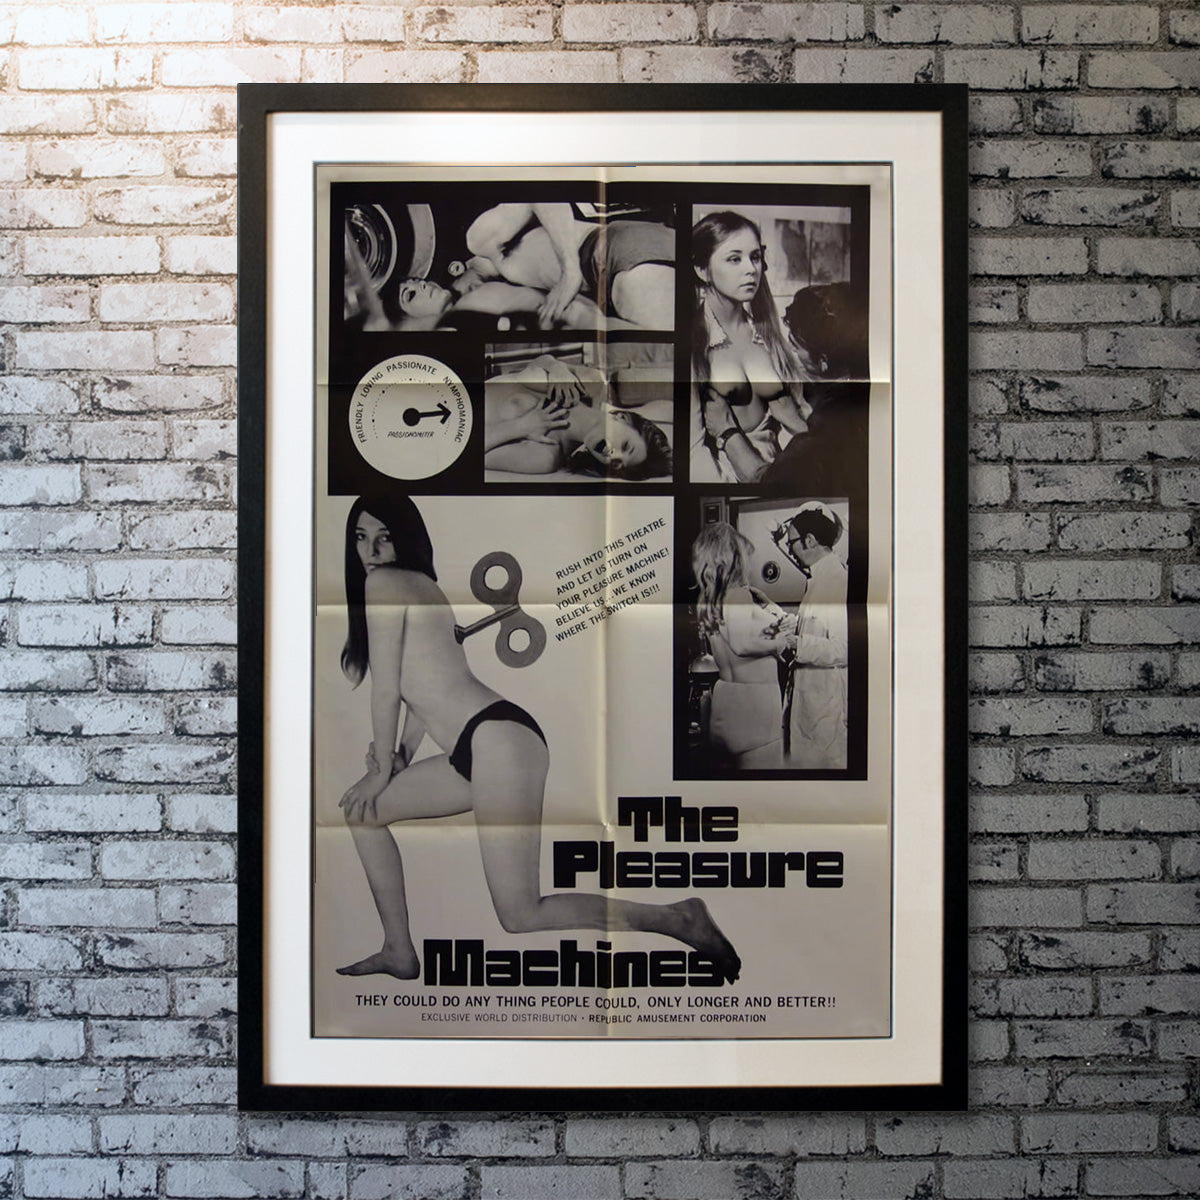 Pleasure Machines, The (1969)